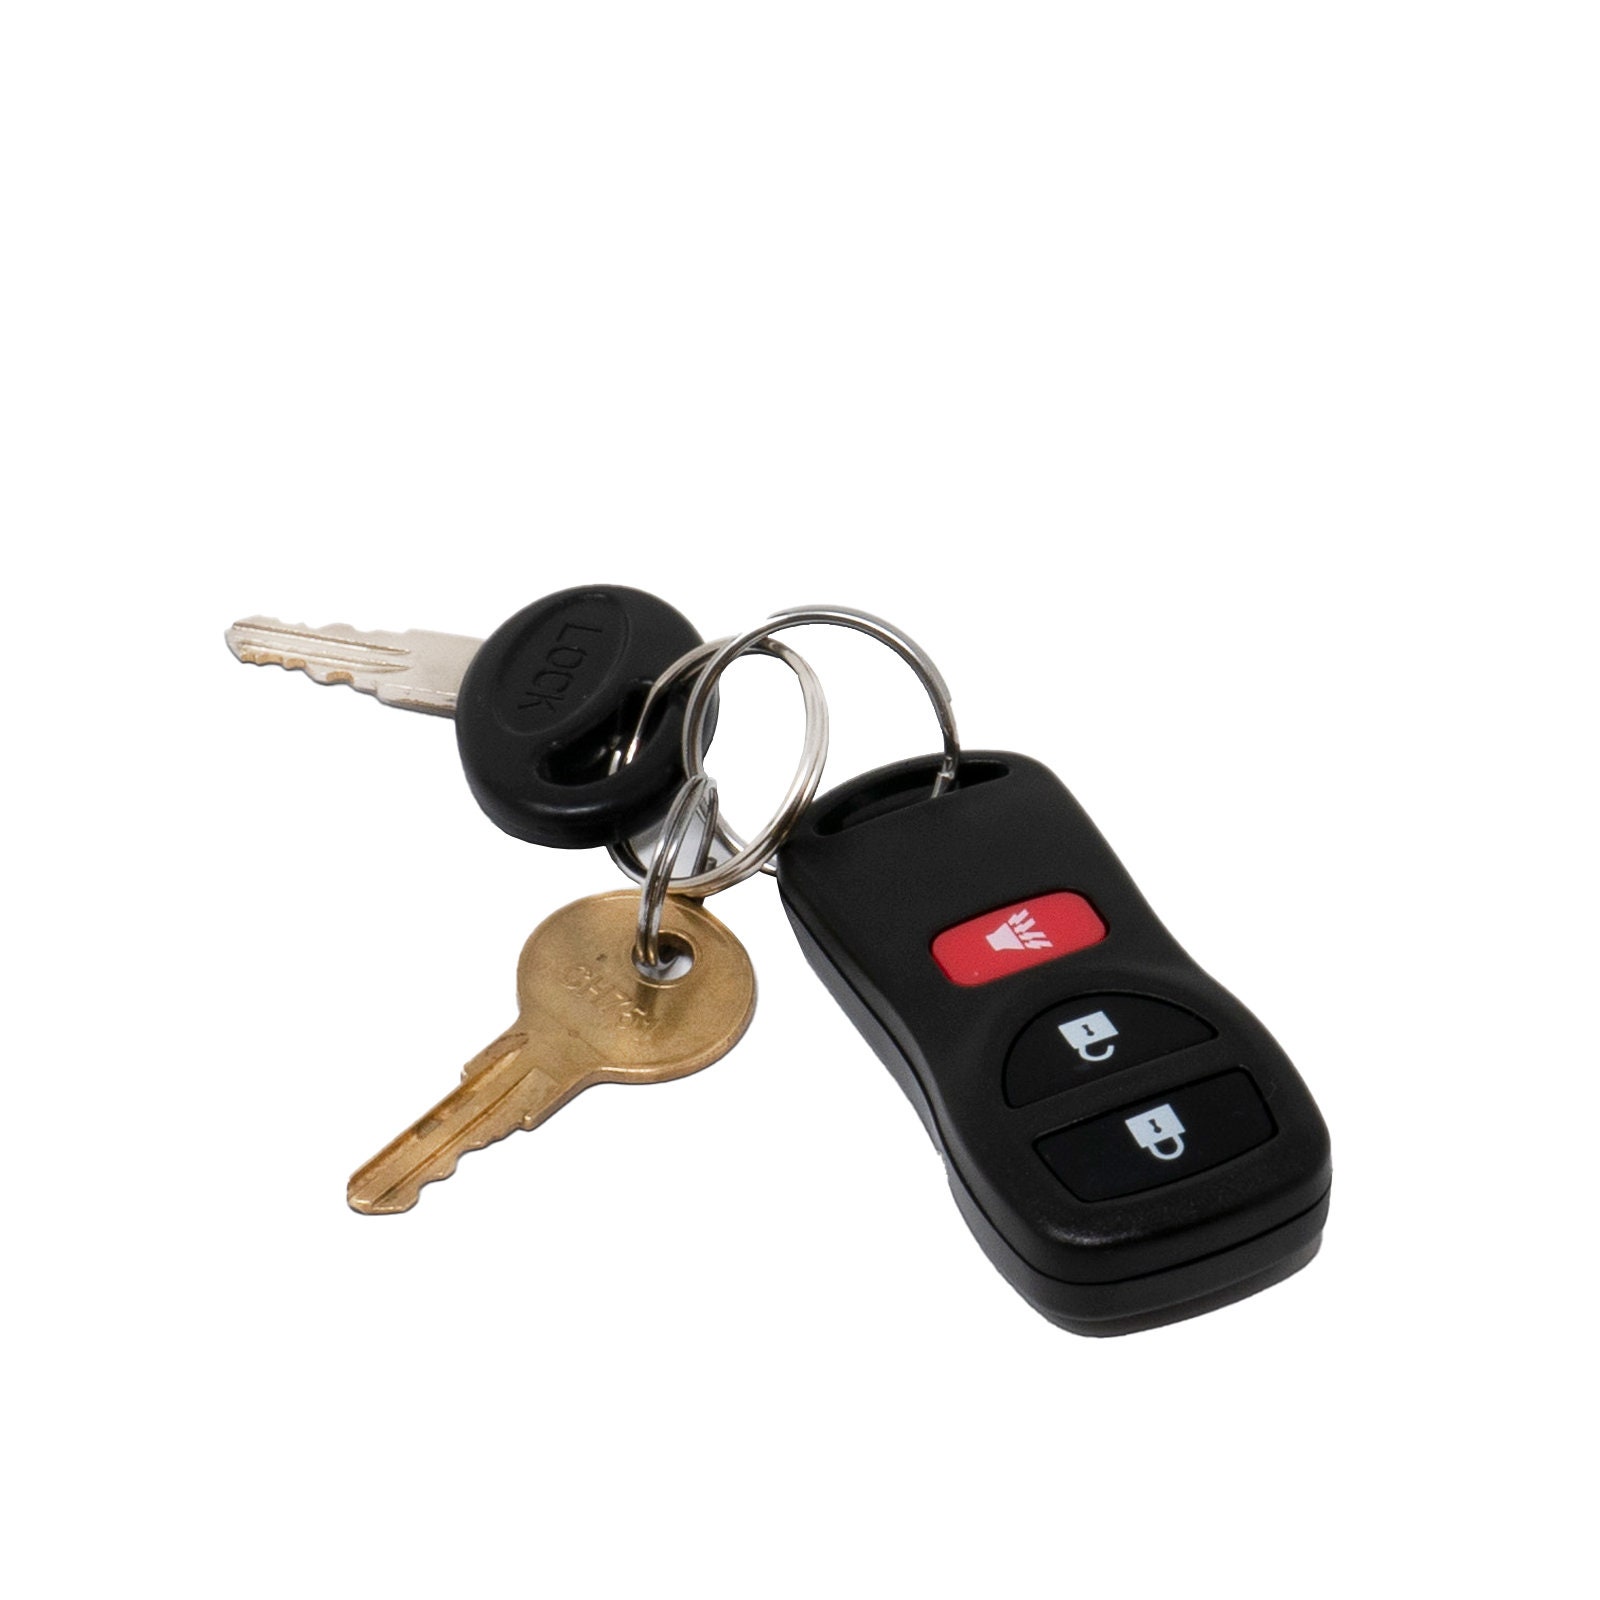 Fake Car Key Remote Diversion Safe Stash Can Stash Box for Cash